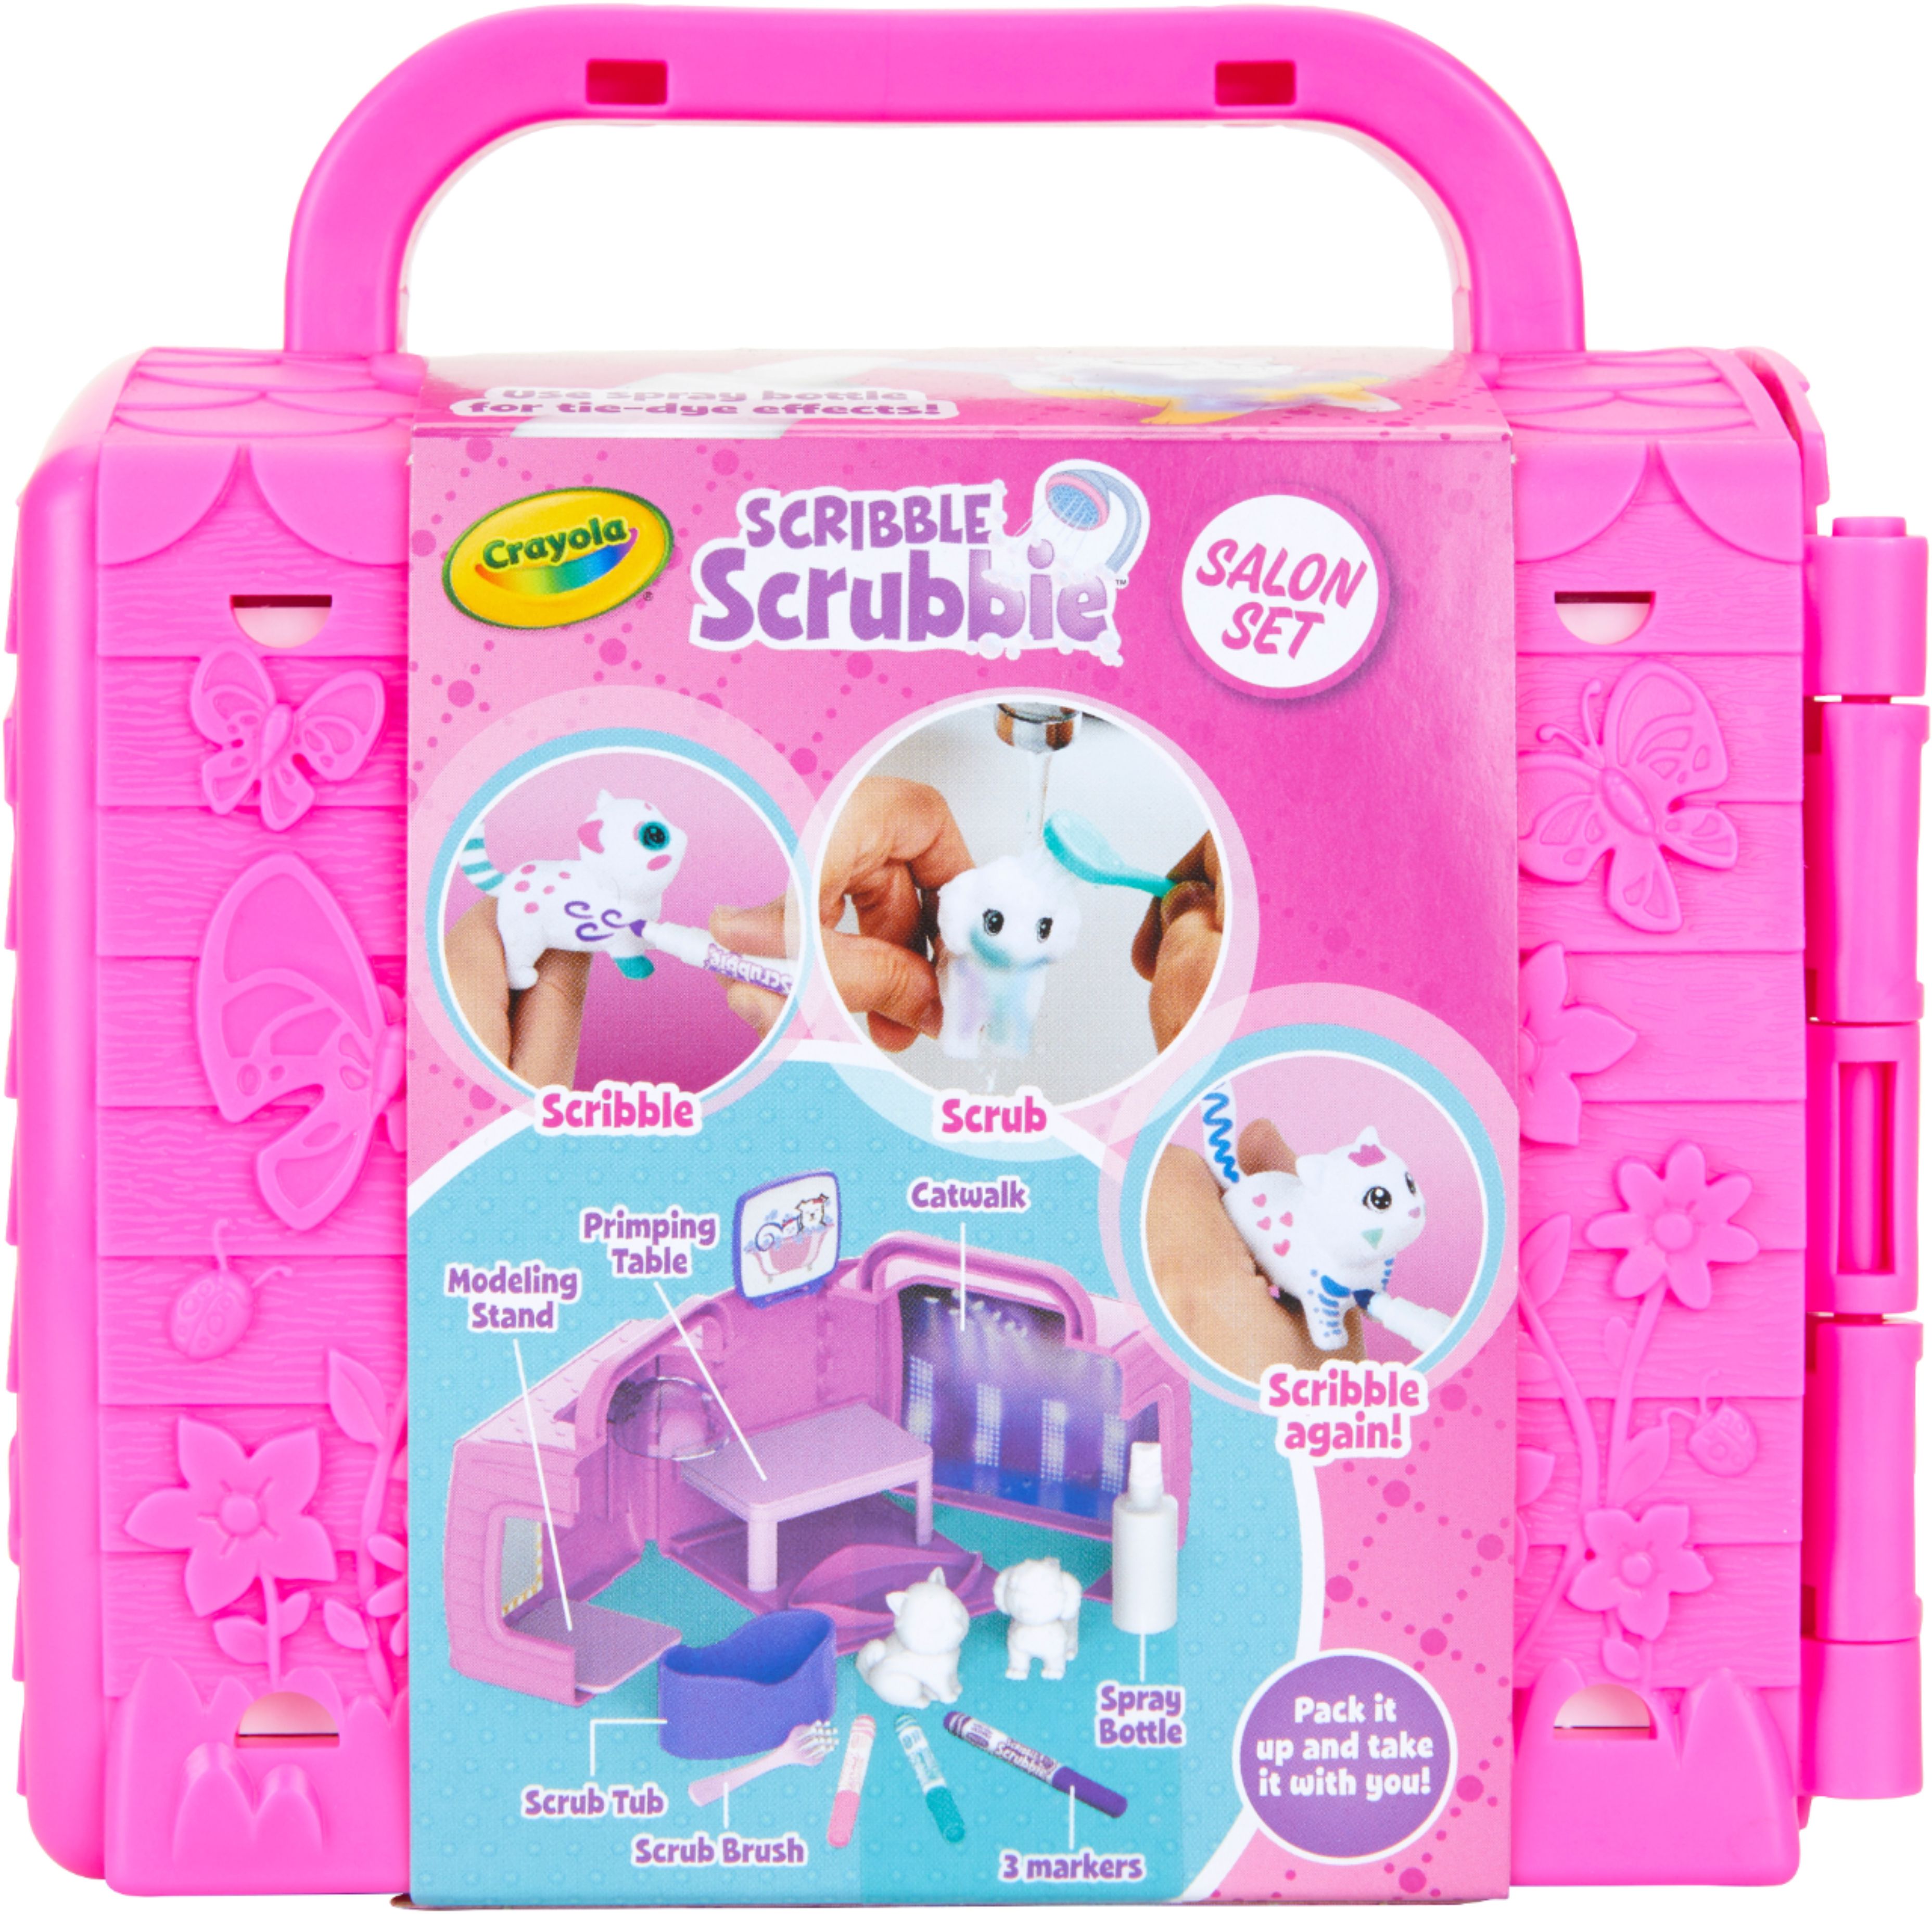 Crayola Scribble Scrubbie Pets Carnival Playset $12.49 (Retail $19.15)